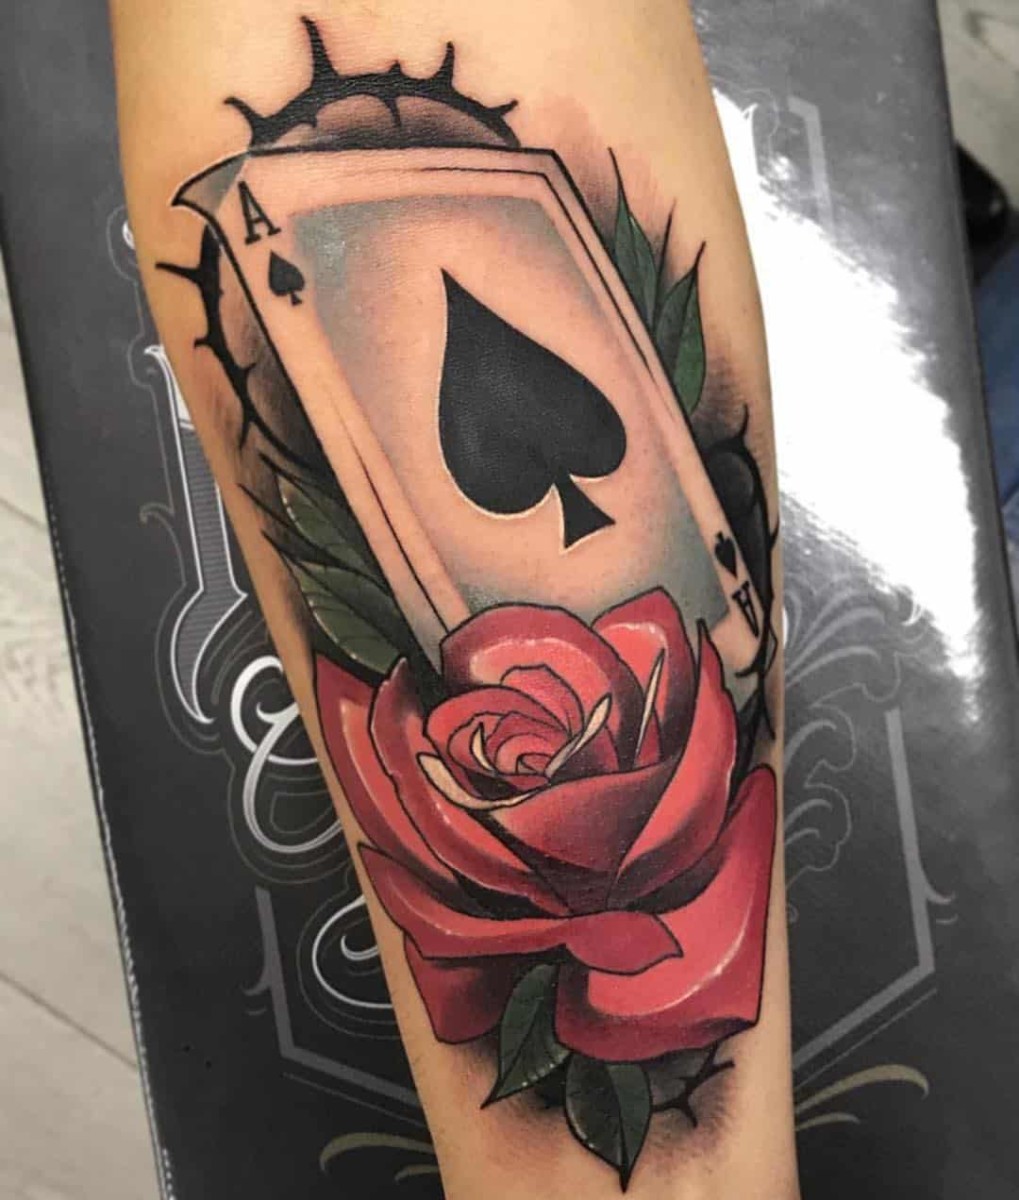 ace-of-spades-tatuointi-rose-by-@estepa_tattoo